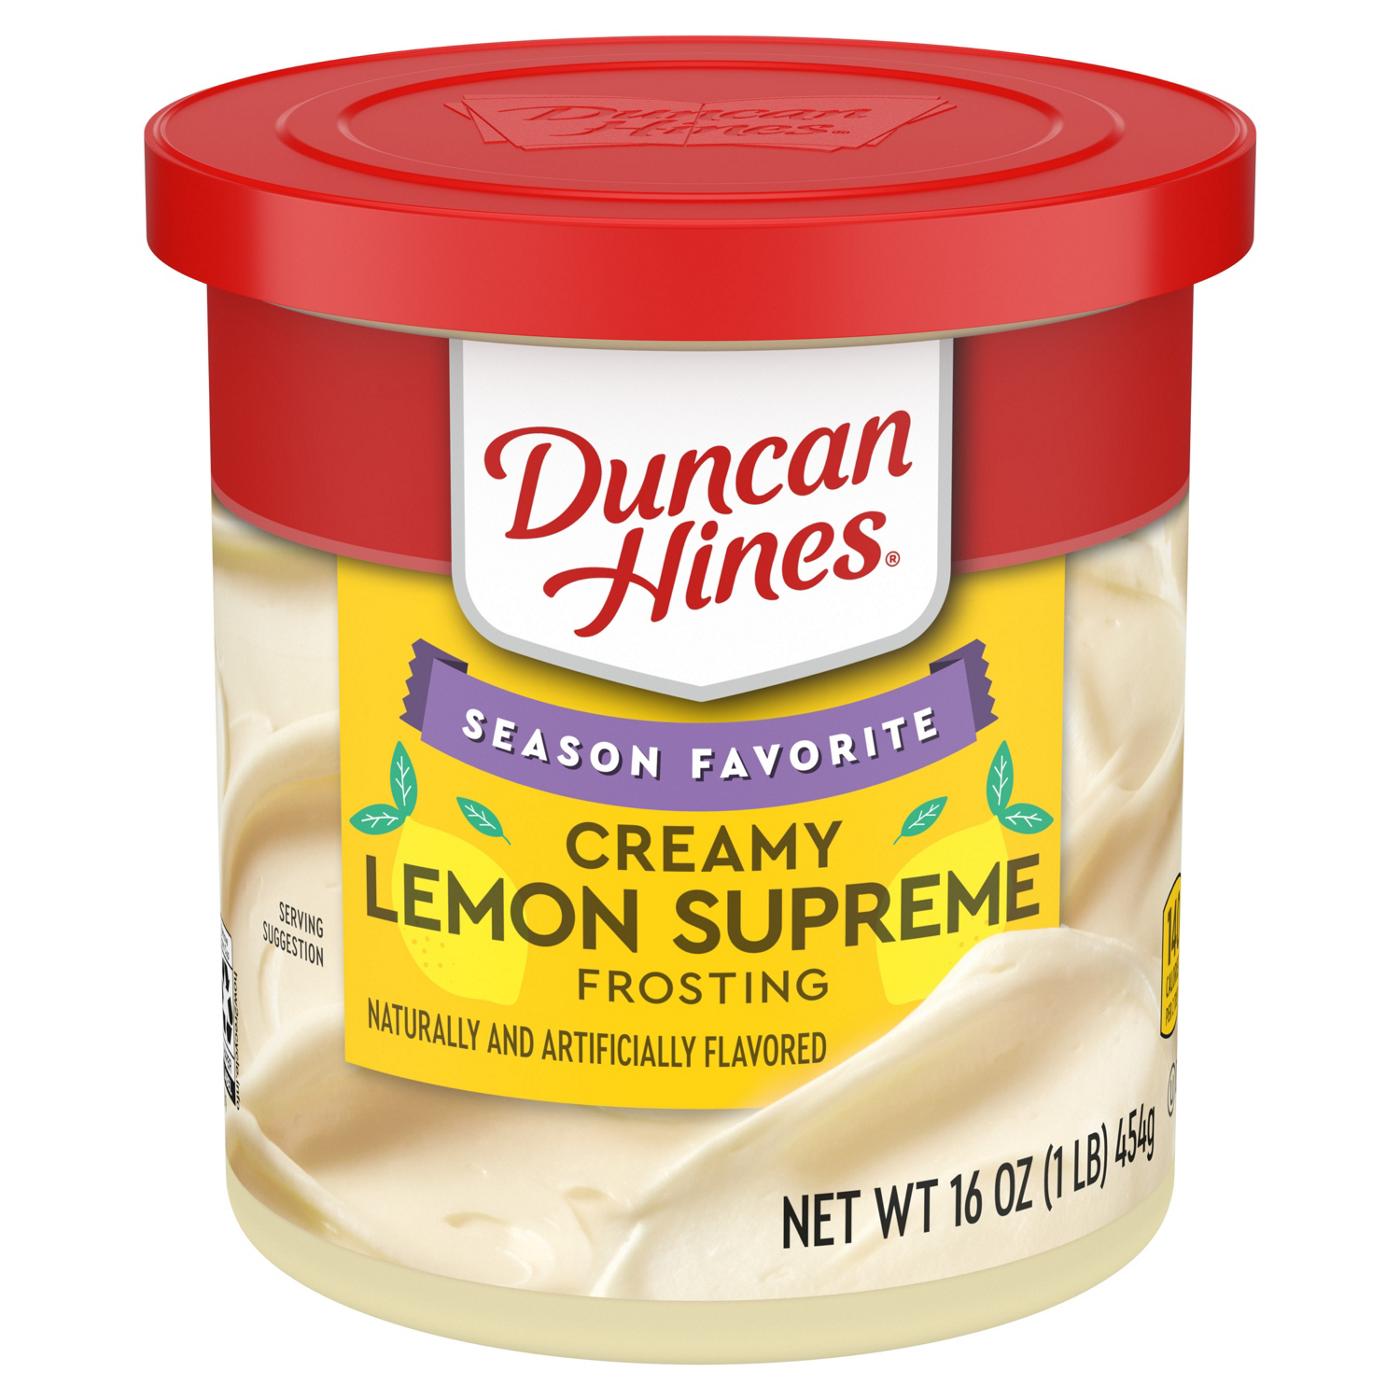 Duncan Hines Creamy Lemon Supreme Frosting; image 1 of 7